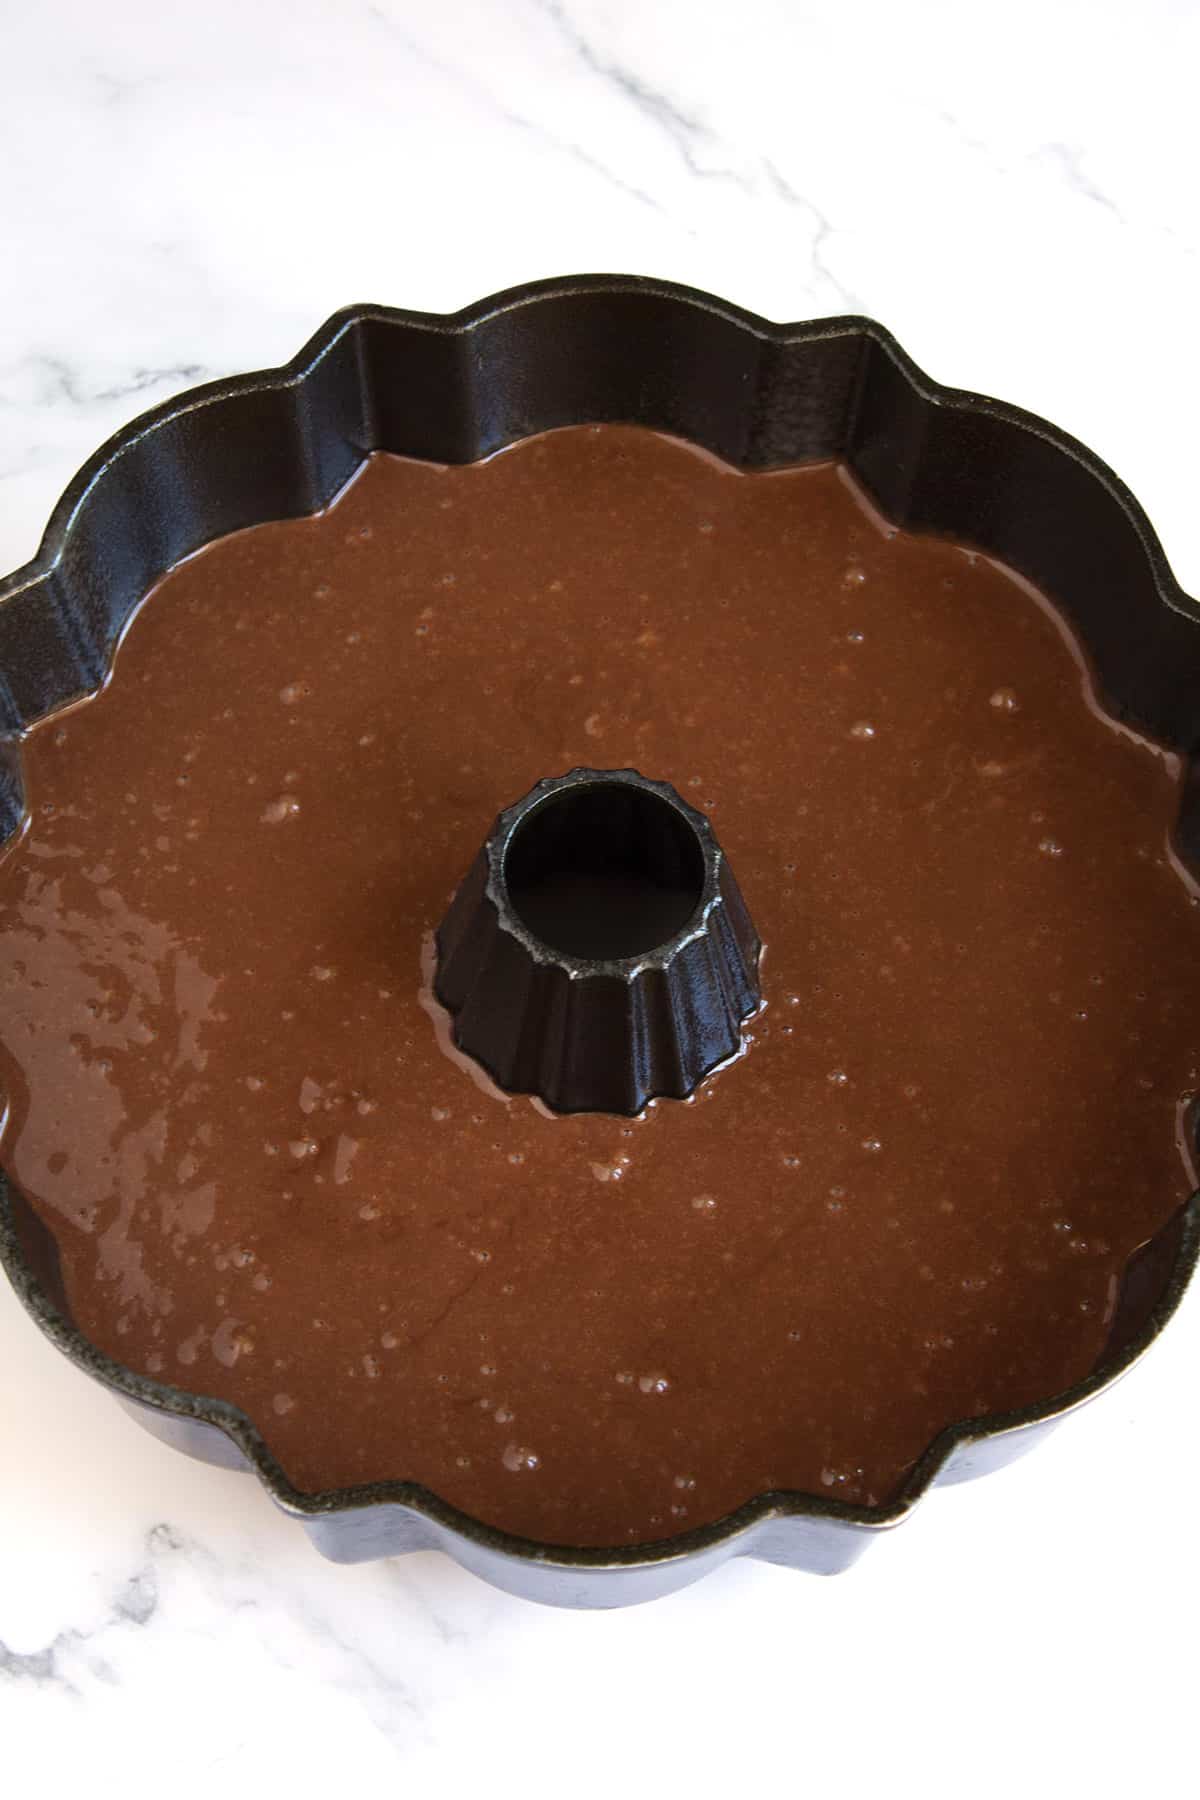 Black bundt cake pan filled ¾ full with chocolate cake batter.